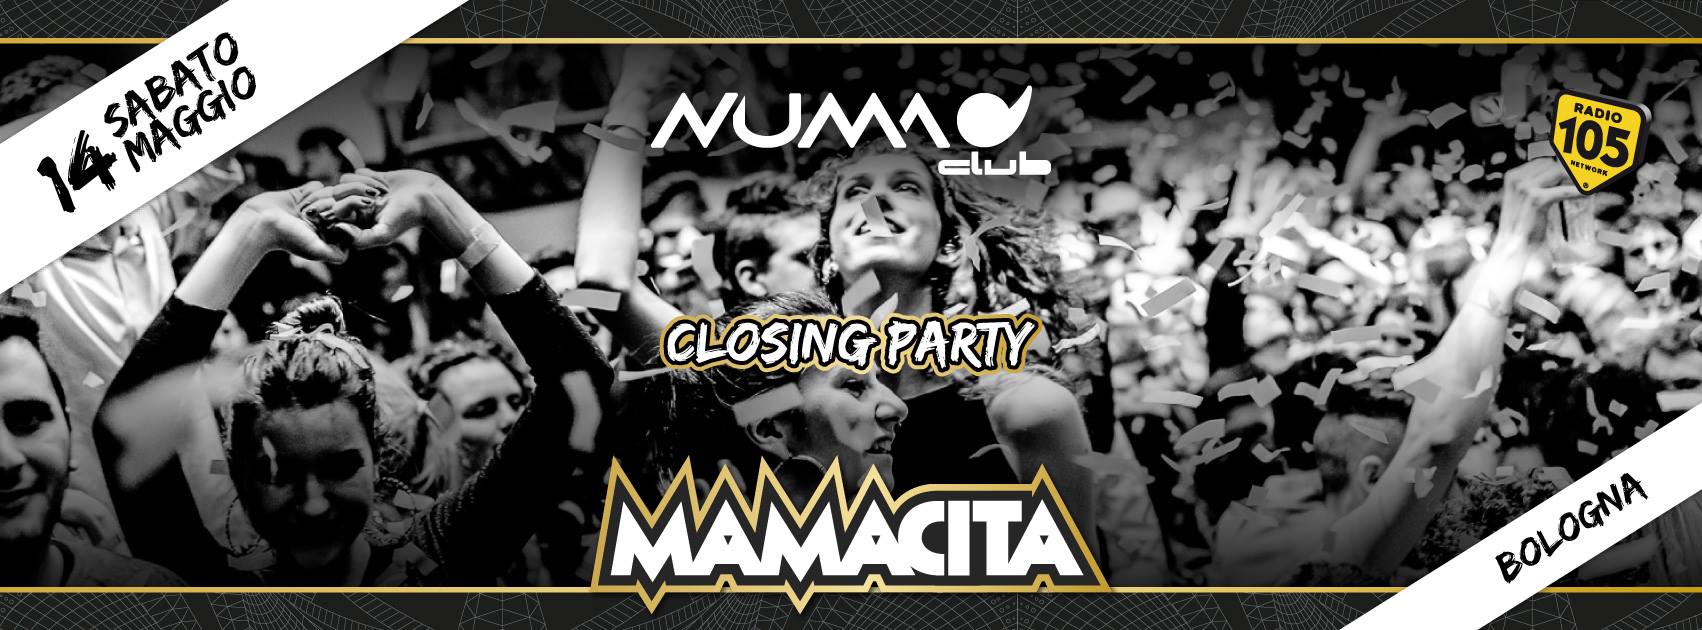 Mamacita Closing Party 2016 alla Discoteca Numa di Bologna